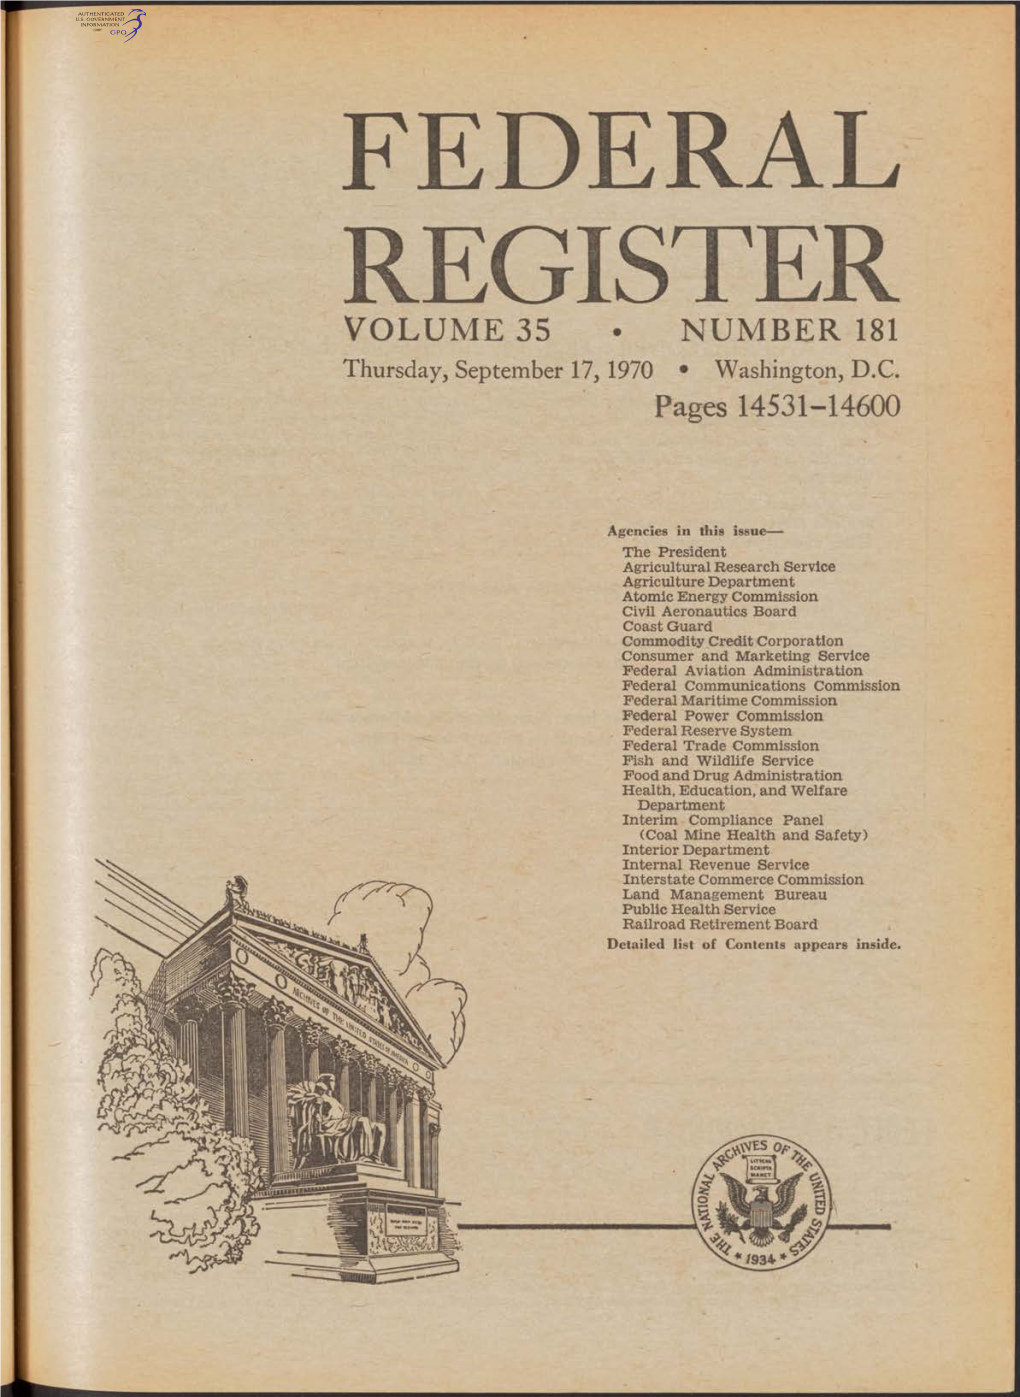 FEDERAL REGISTER VOLUME 35 • NUMBER 181 Thursday, September 17, 1970 • Washington, D.C